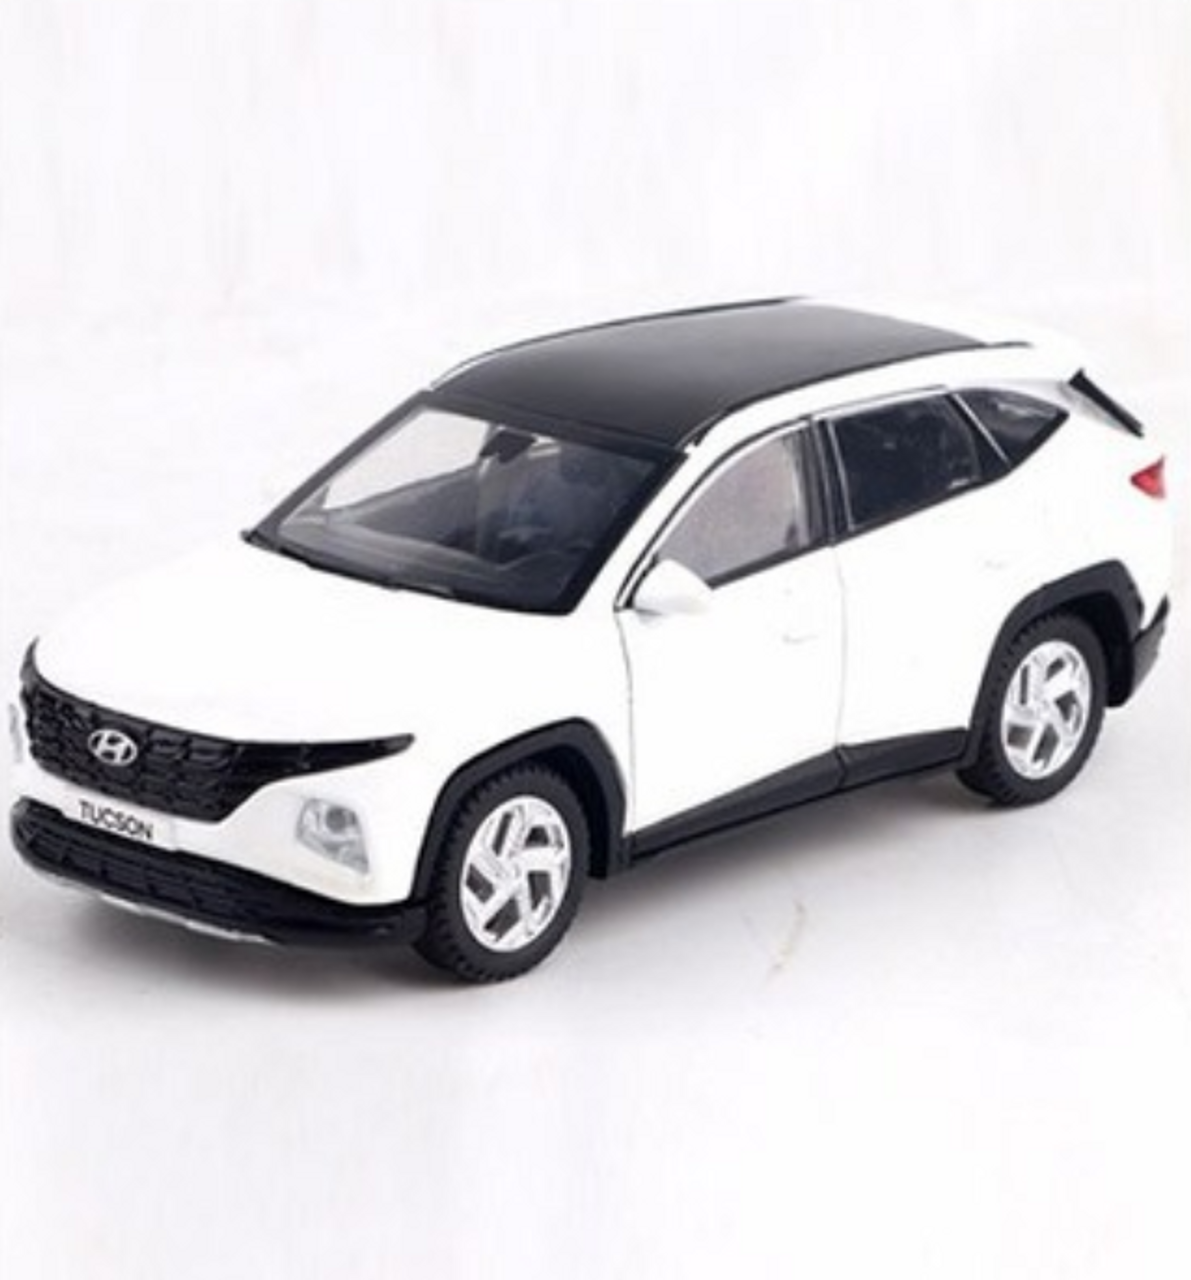 Hyundai Motors Tucson NX4 Diecast Mini Car 2 pcs Set Toy 1:38 Miniature  Model Black